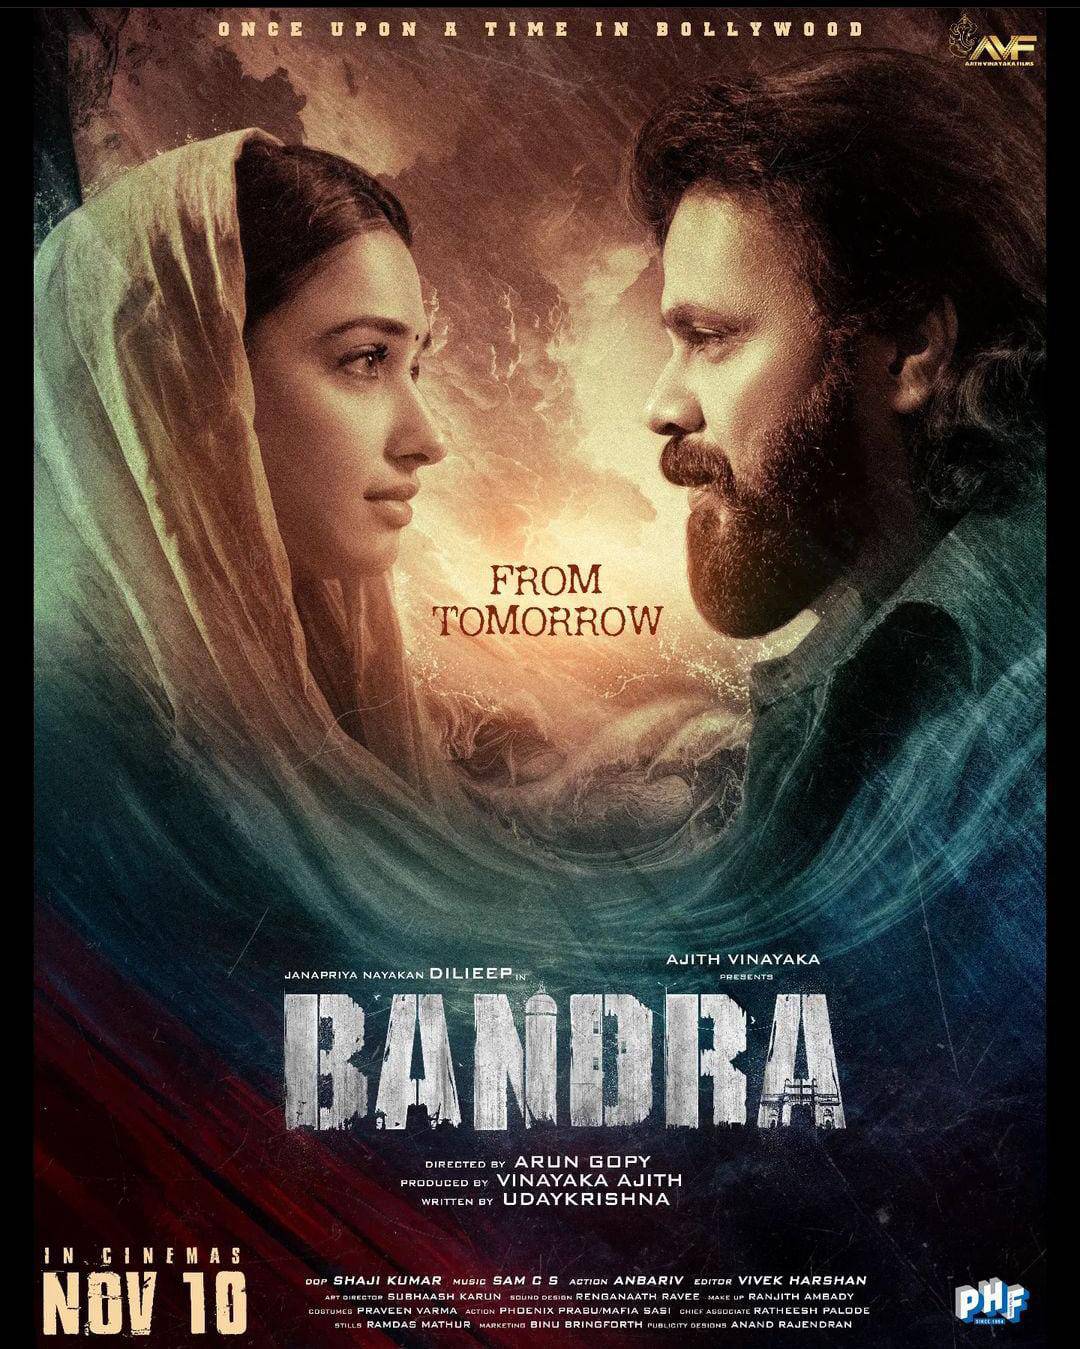 Bandra Worldwide Collection Report